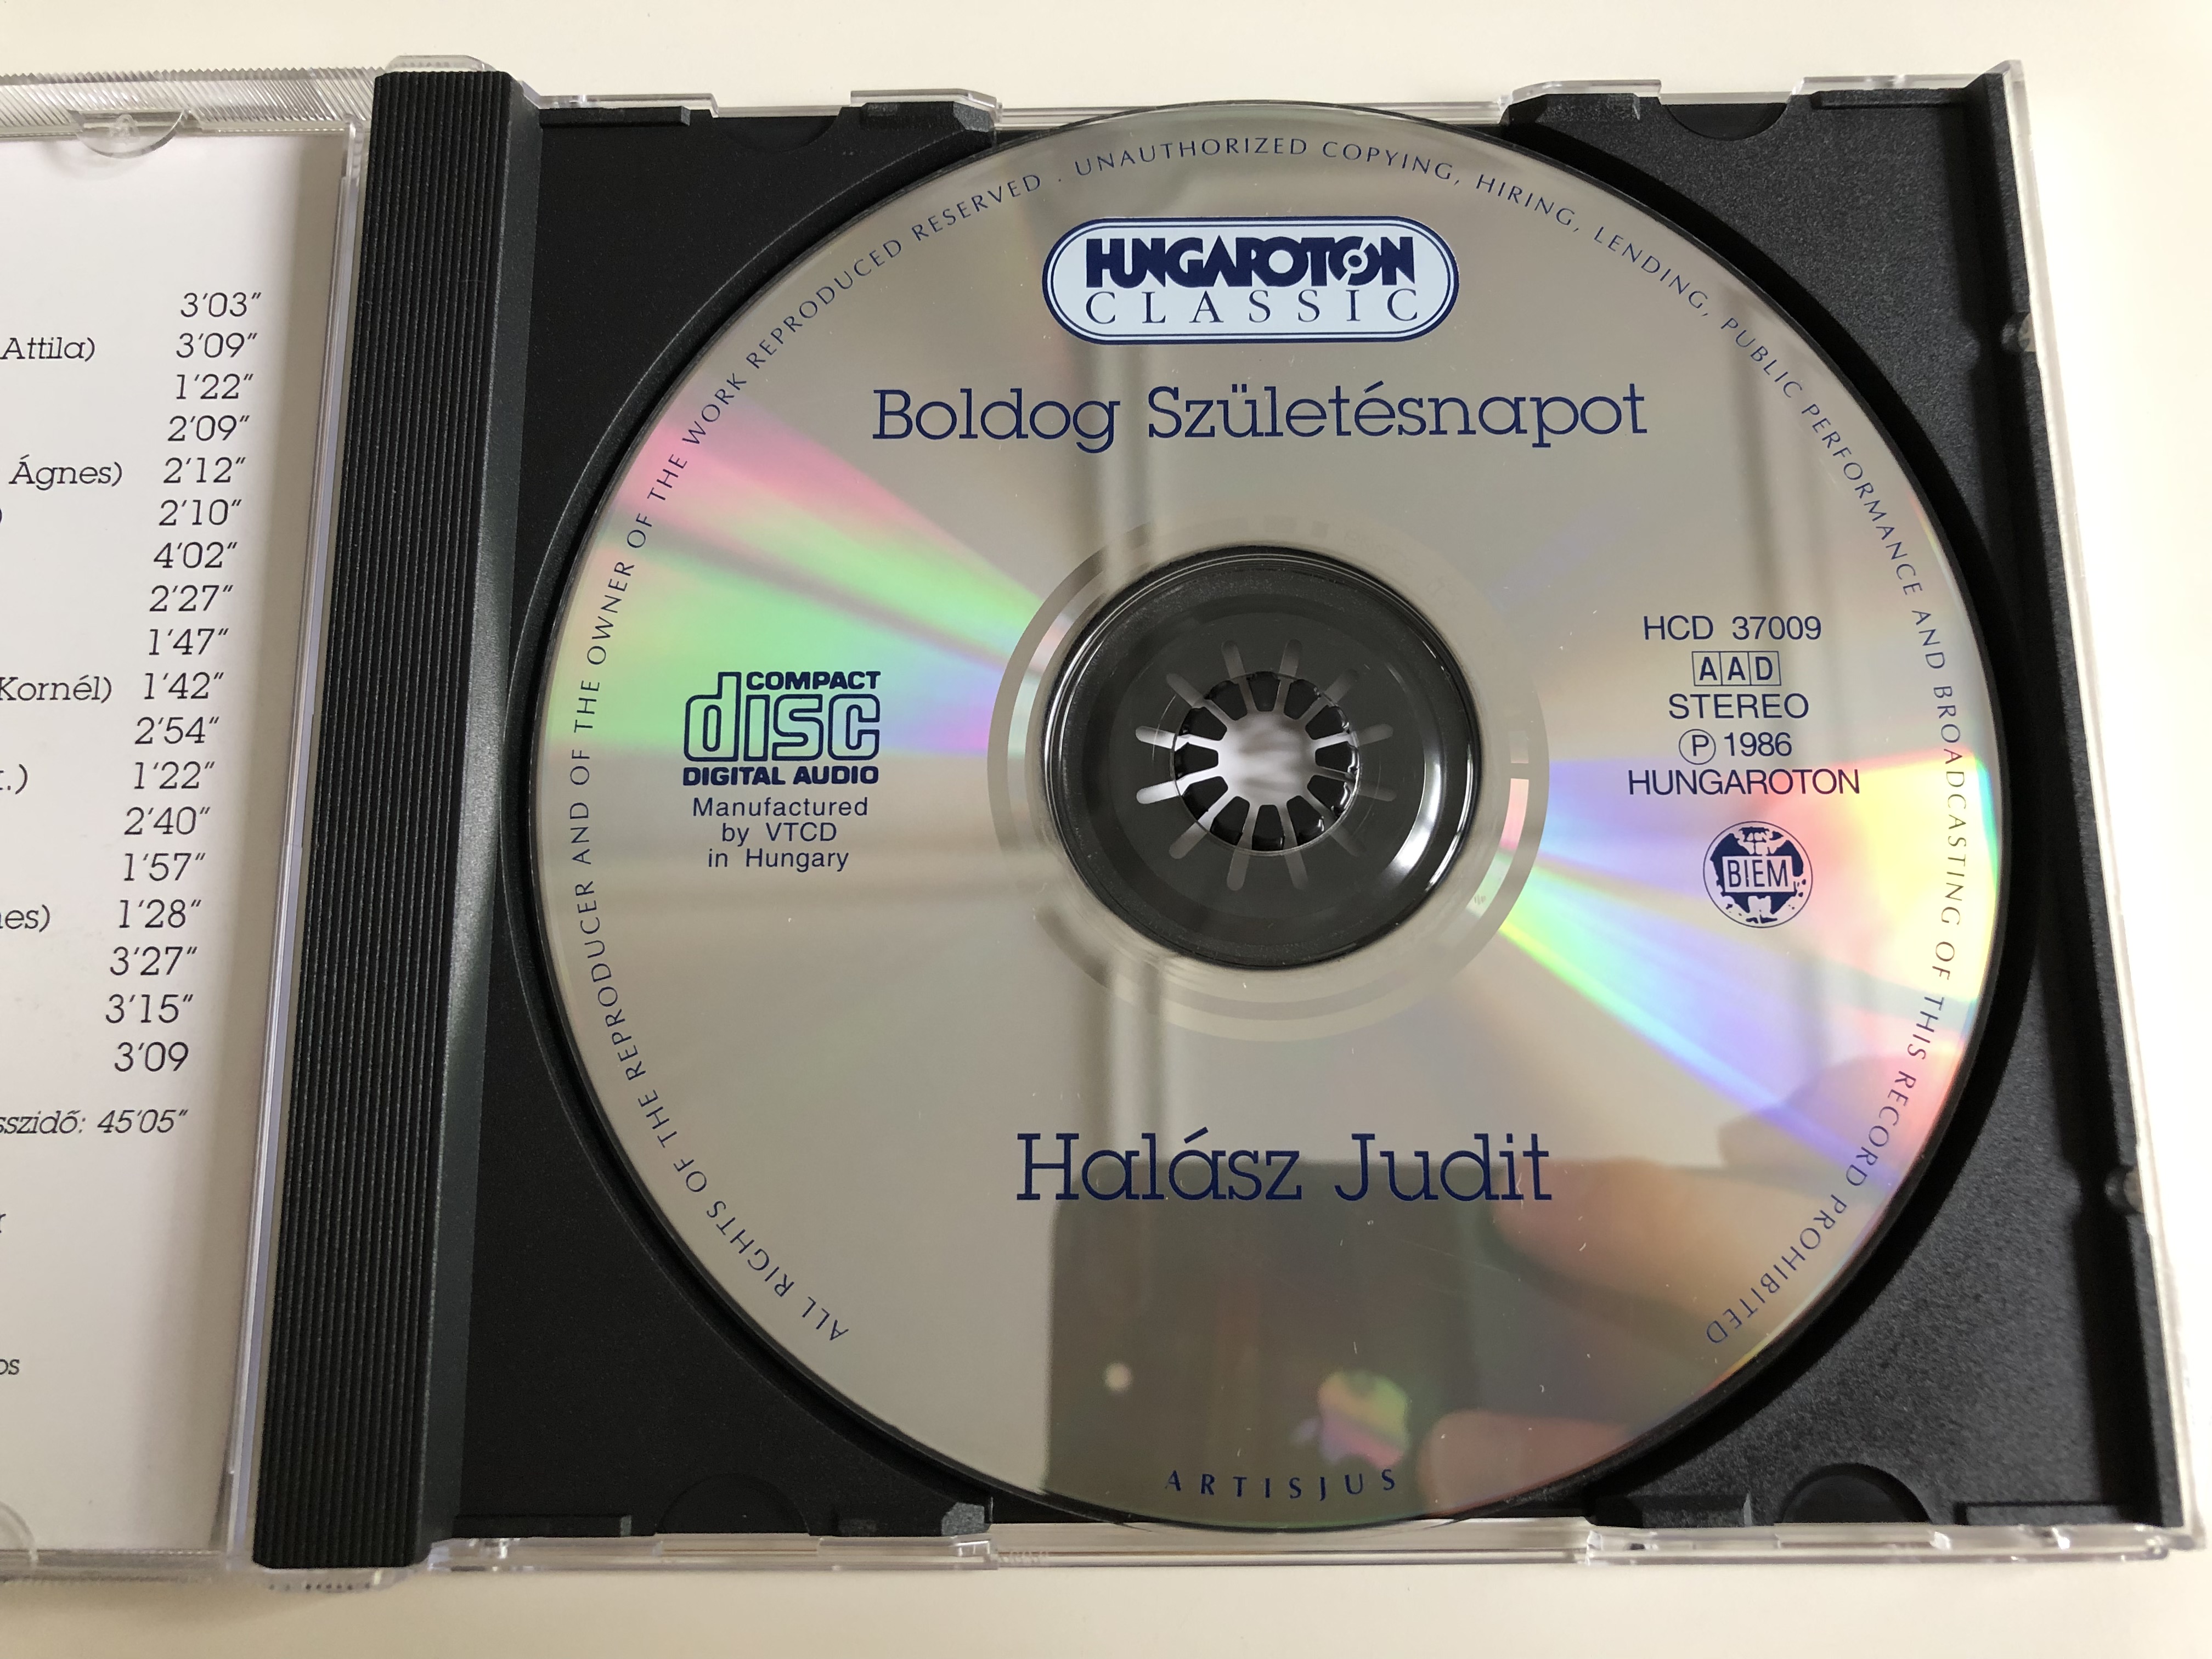 hal-sz-judit-boldog-sz-let-snapot-audio-cd-1998-hungaroton-classic-hcd-37009-3-.jpg